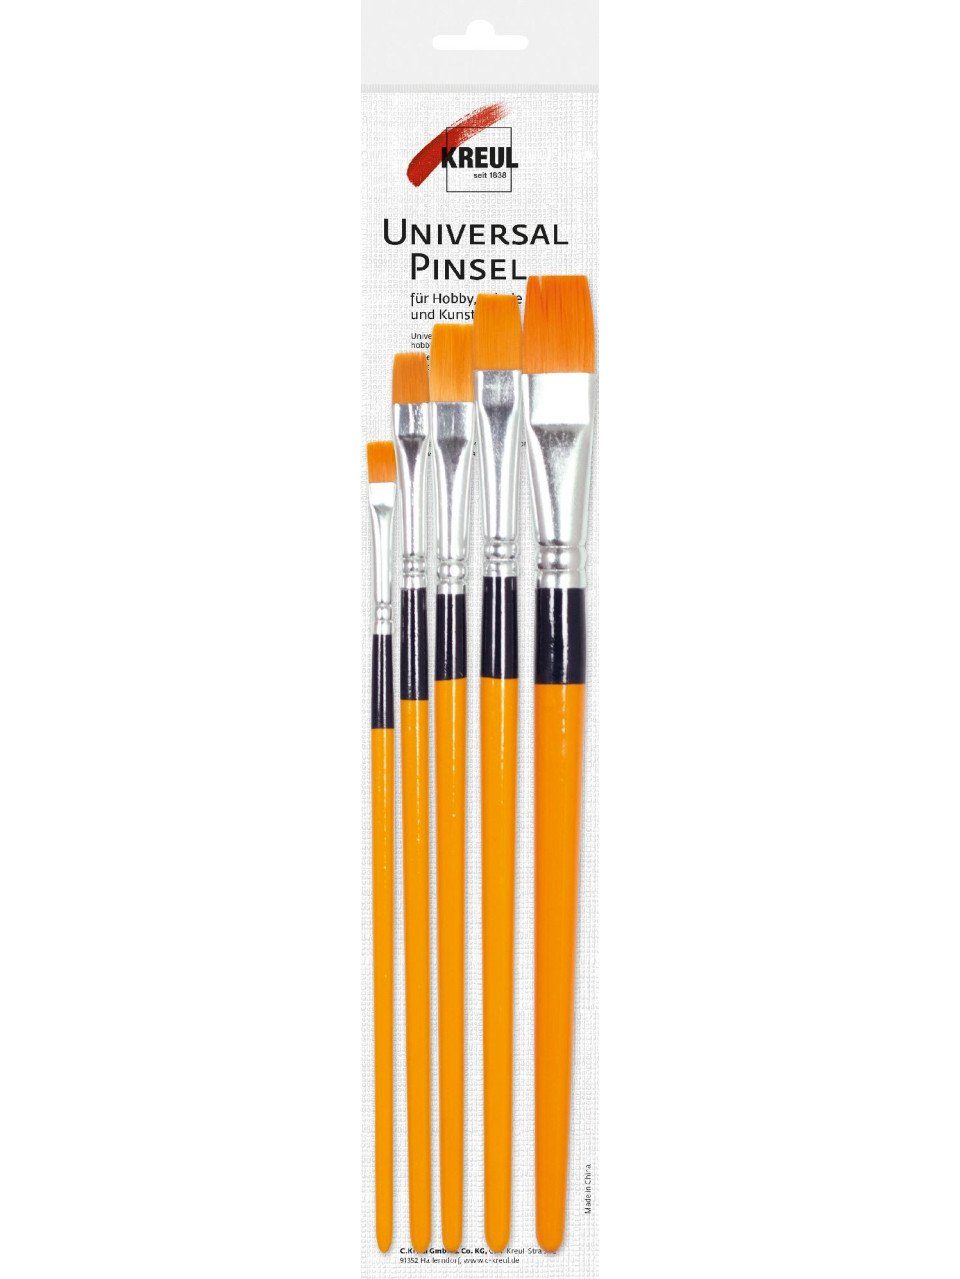 Universalpinsel Synthetics Flachpinsel Kreul Hobby flach Kreul Line